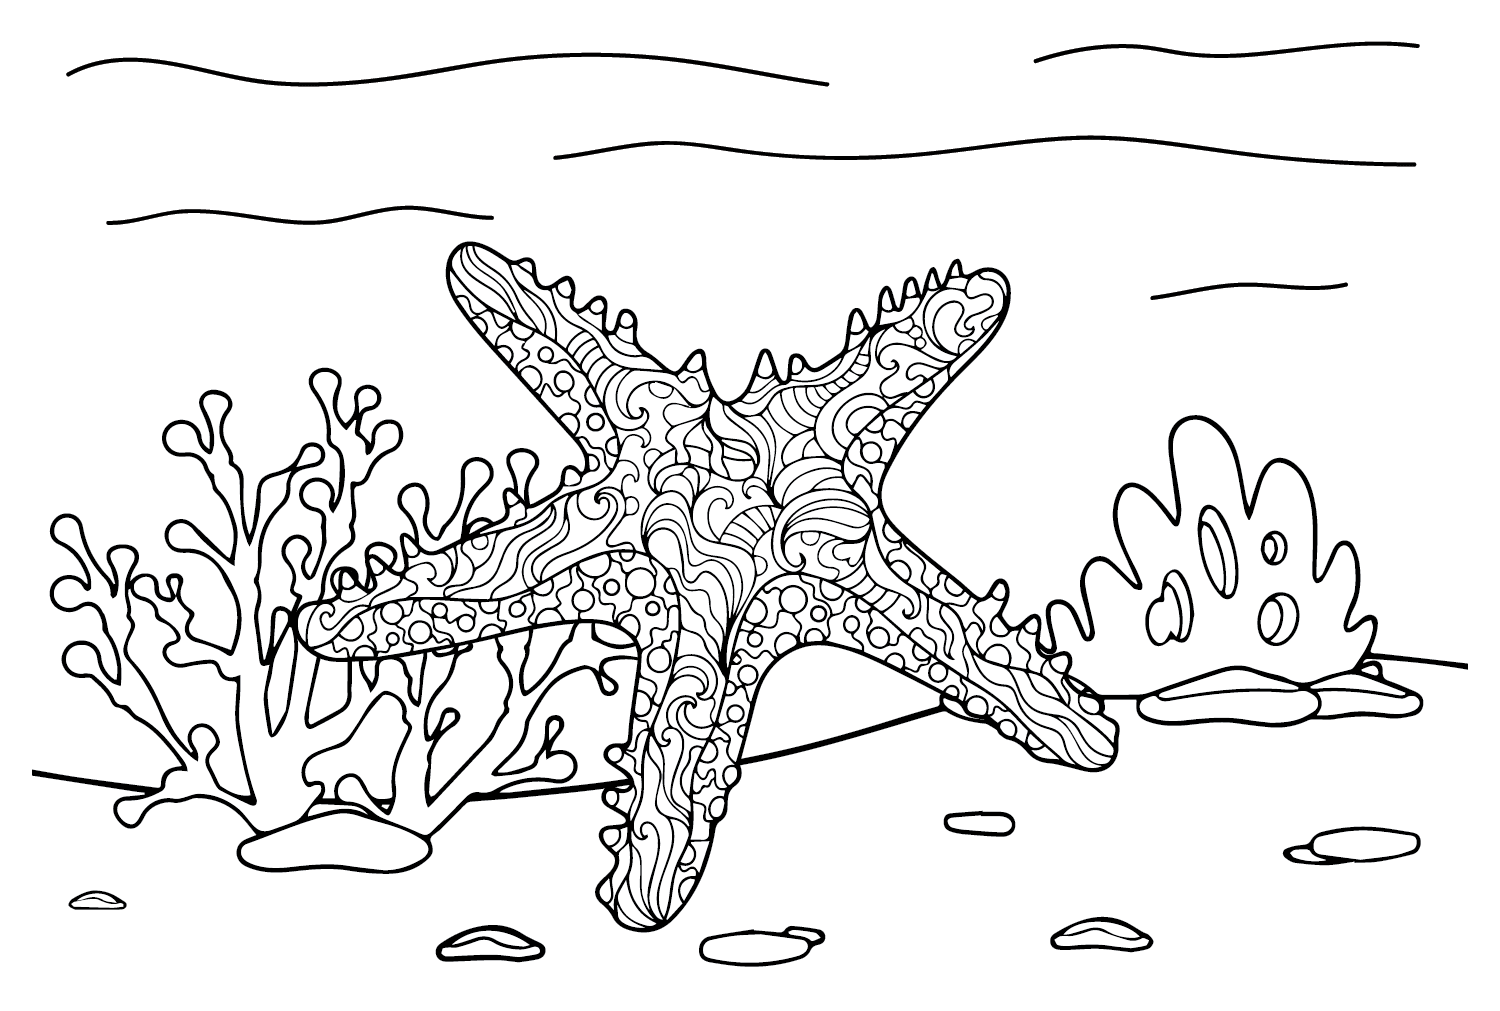 Starfish in The Sea from Starfish